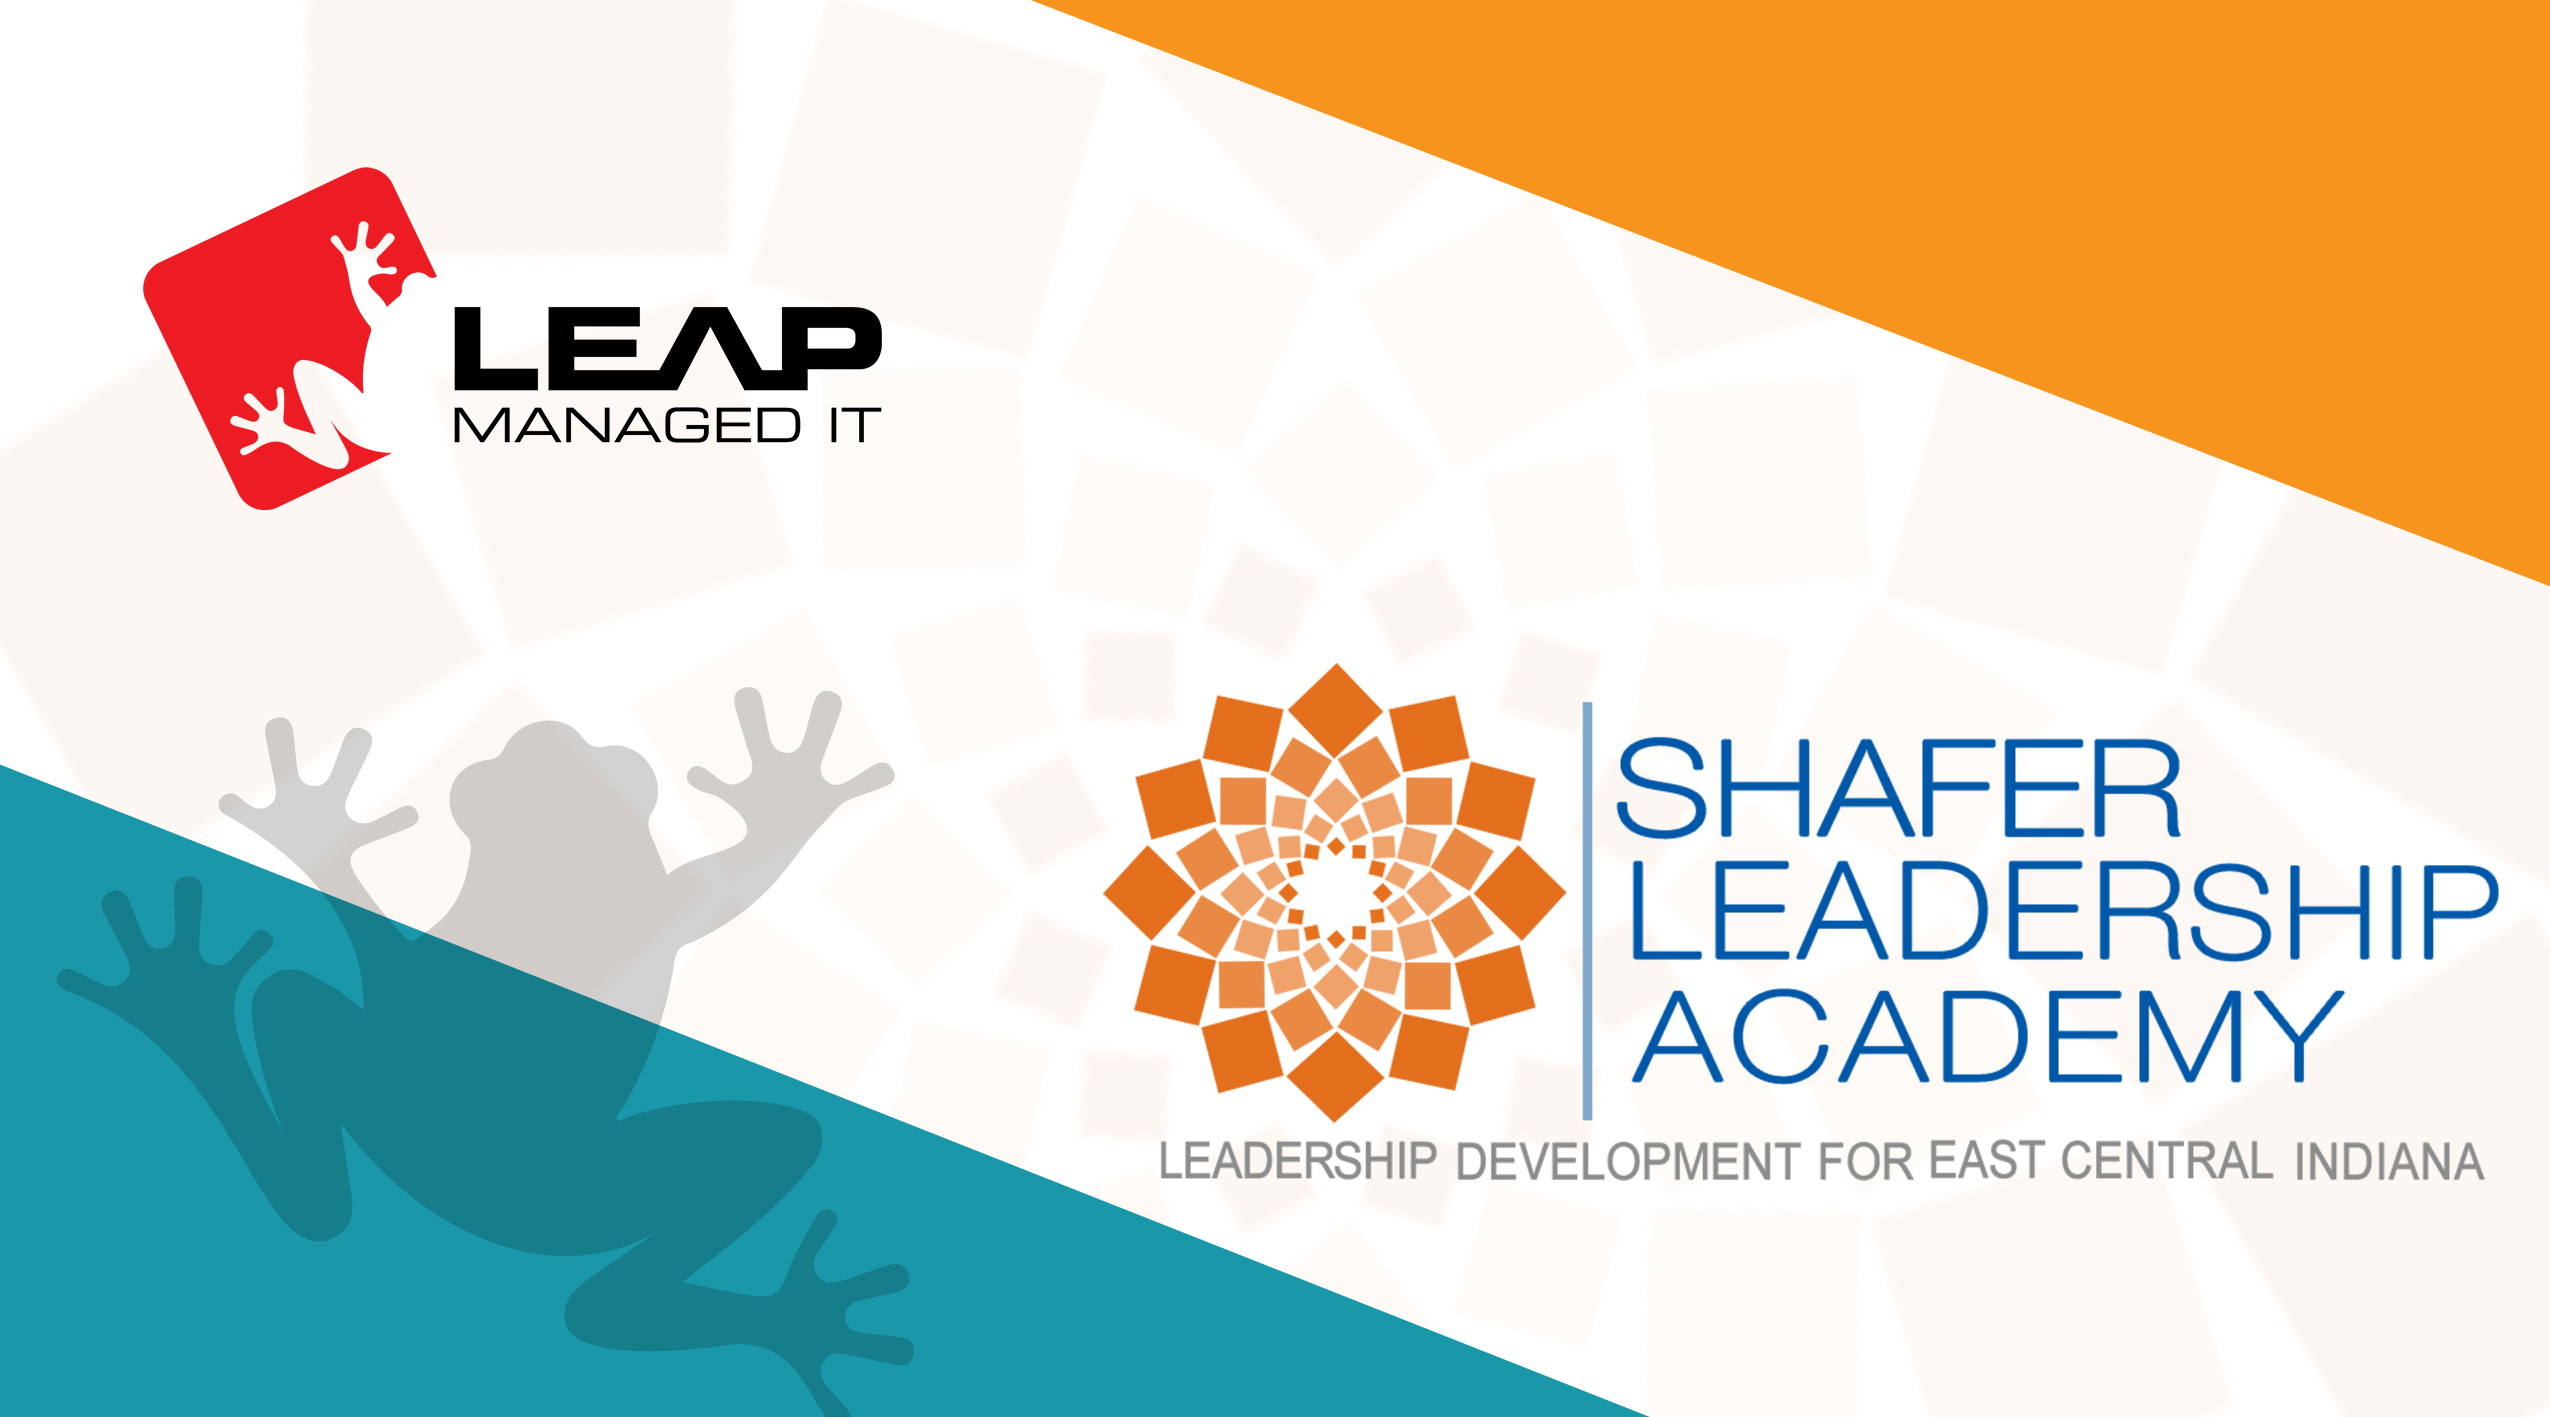 Partner in Focus: Shafer Leadership Academy